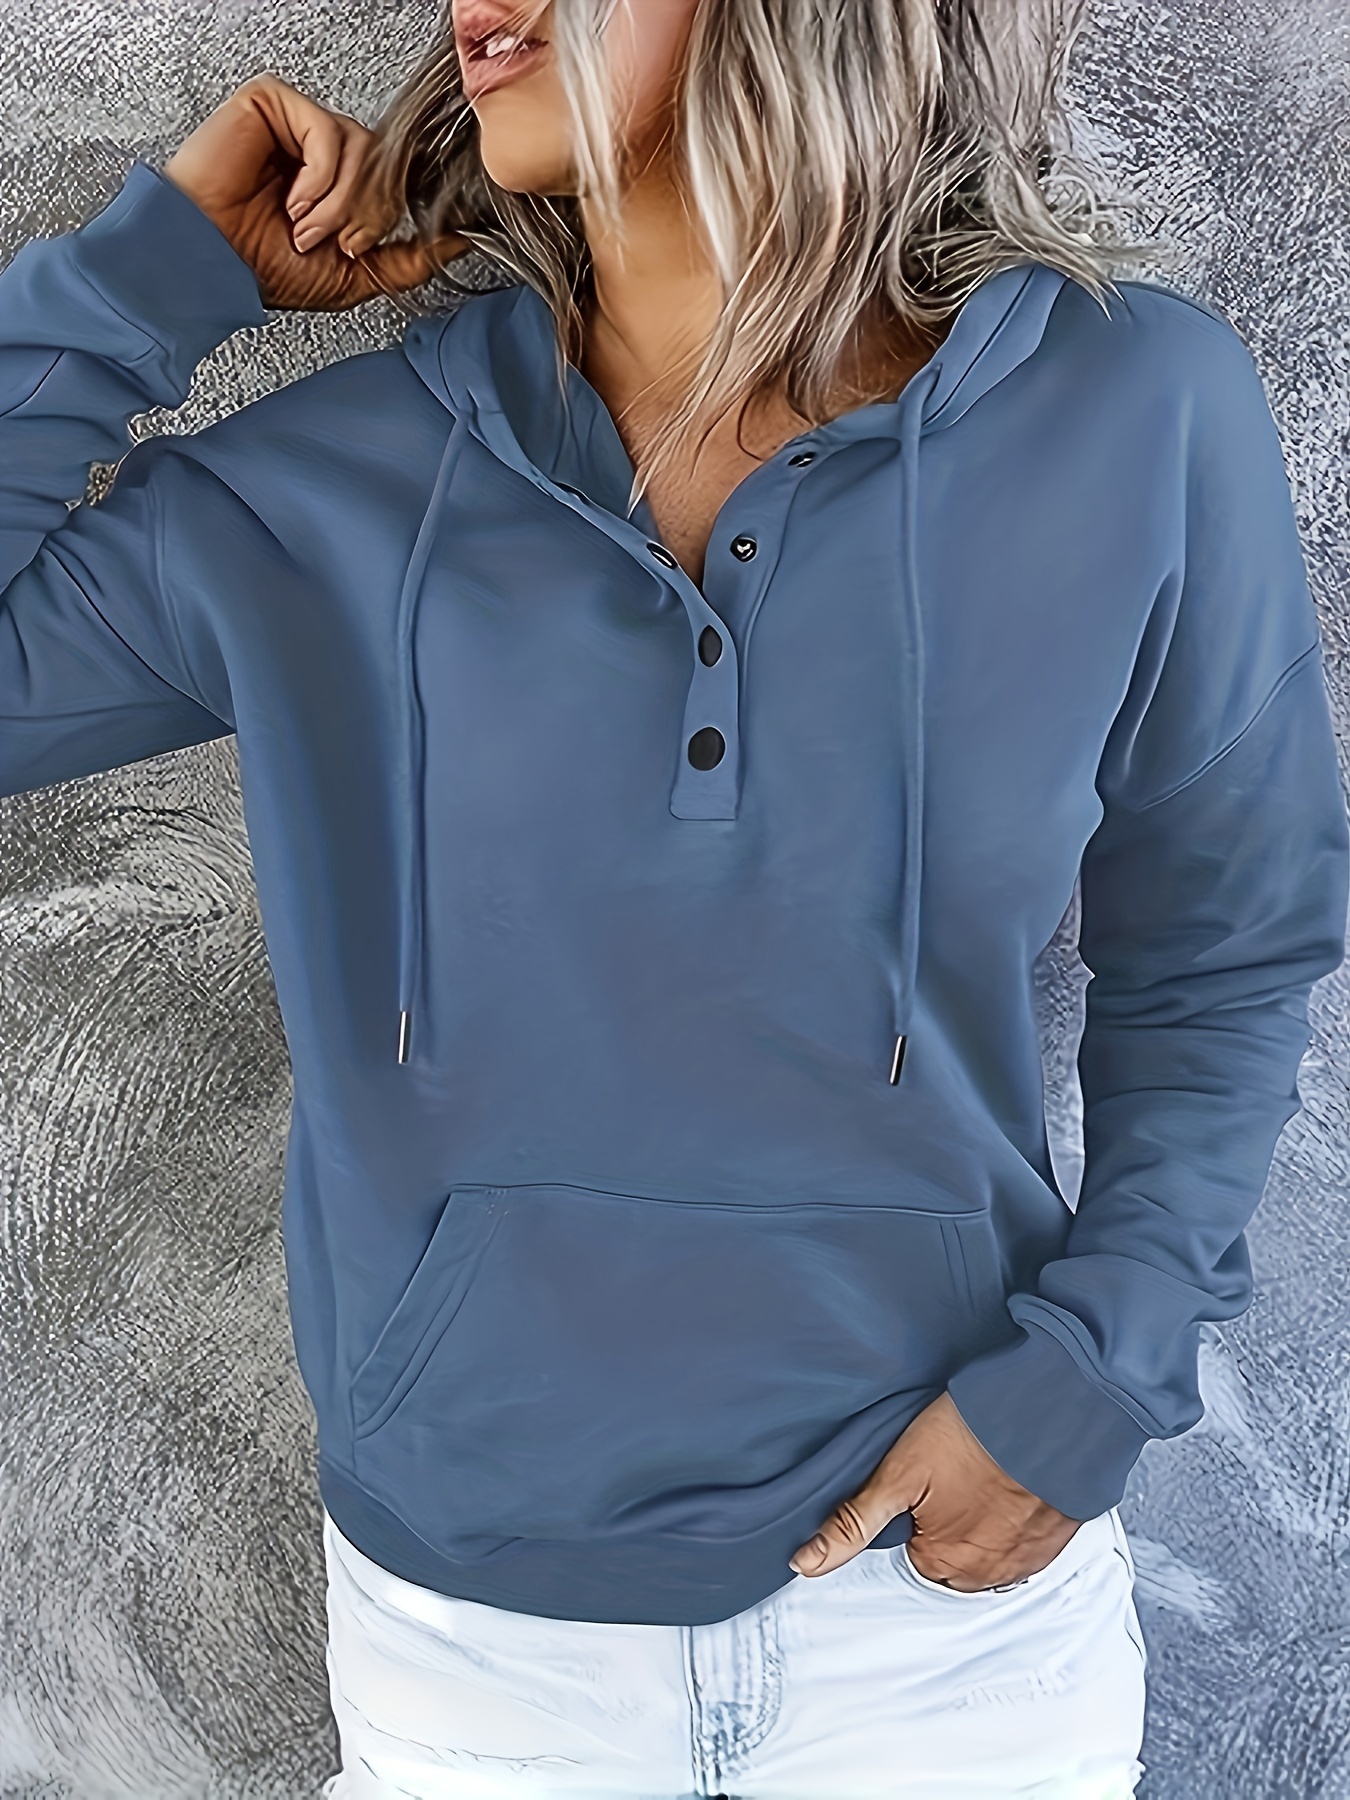 KIJBLAE Discount Women's Fashion Sweatshirt Pocket Drawstring